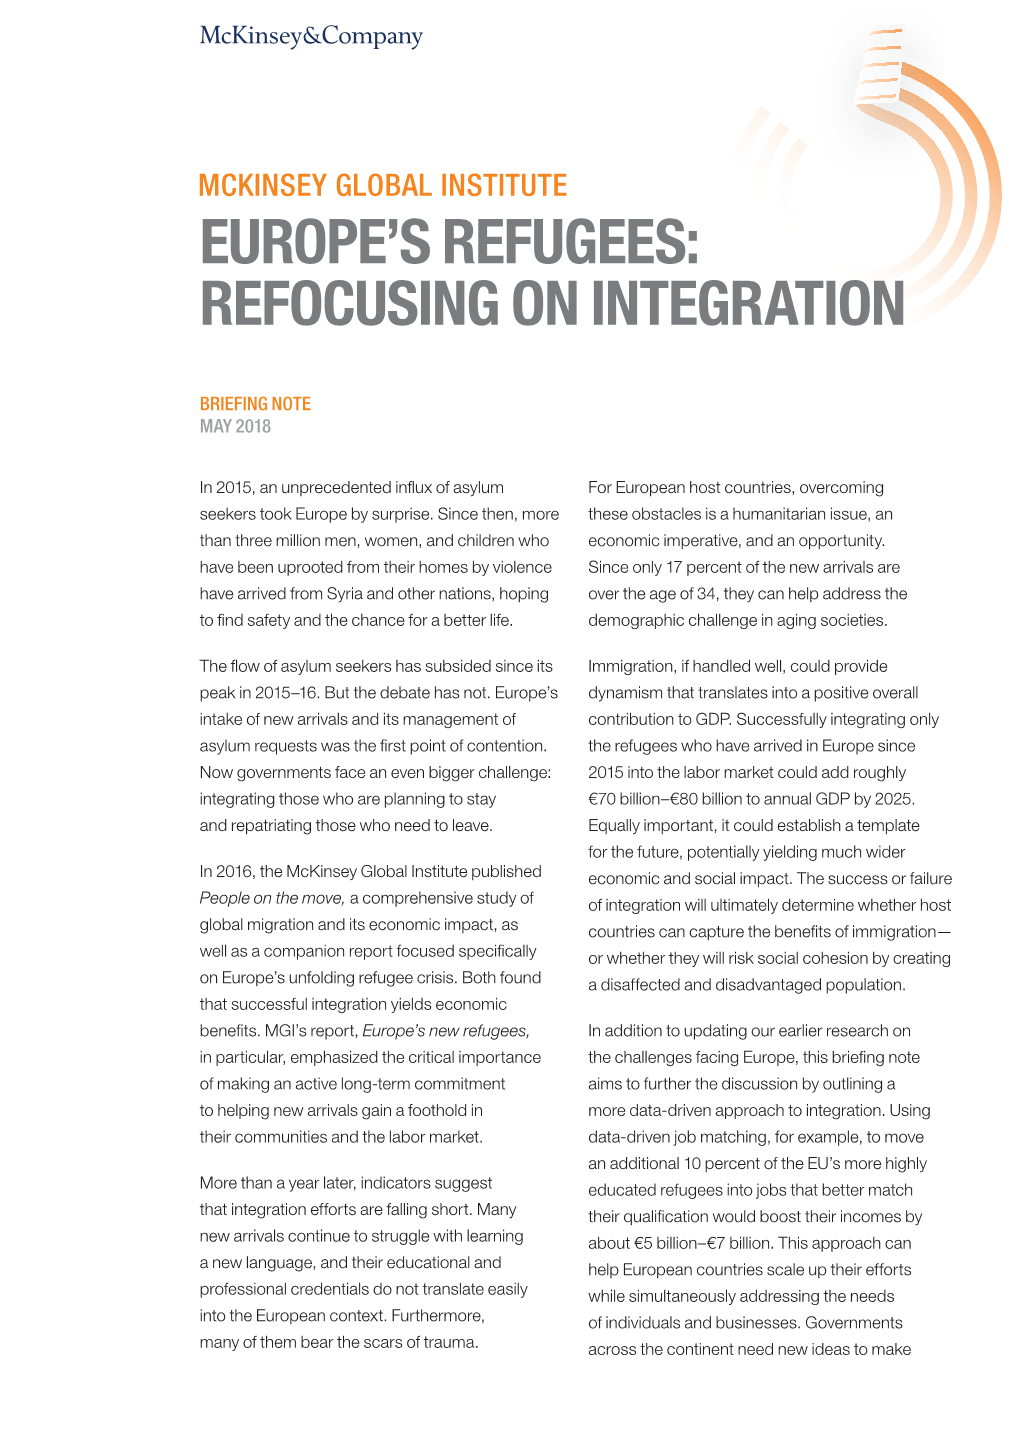 Europe's Refugees: Refocusing on Integration